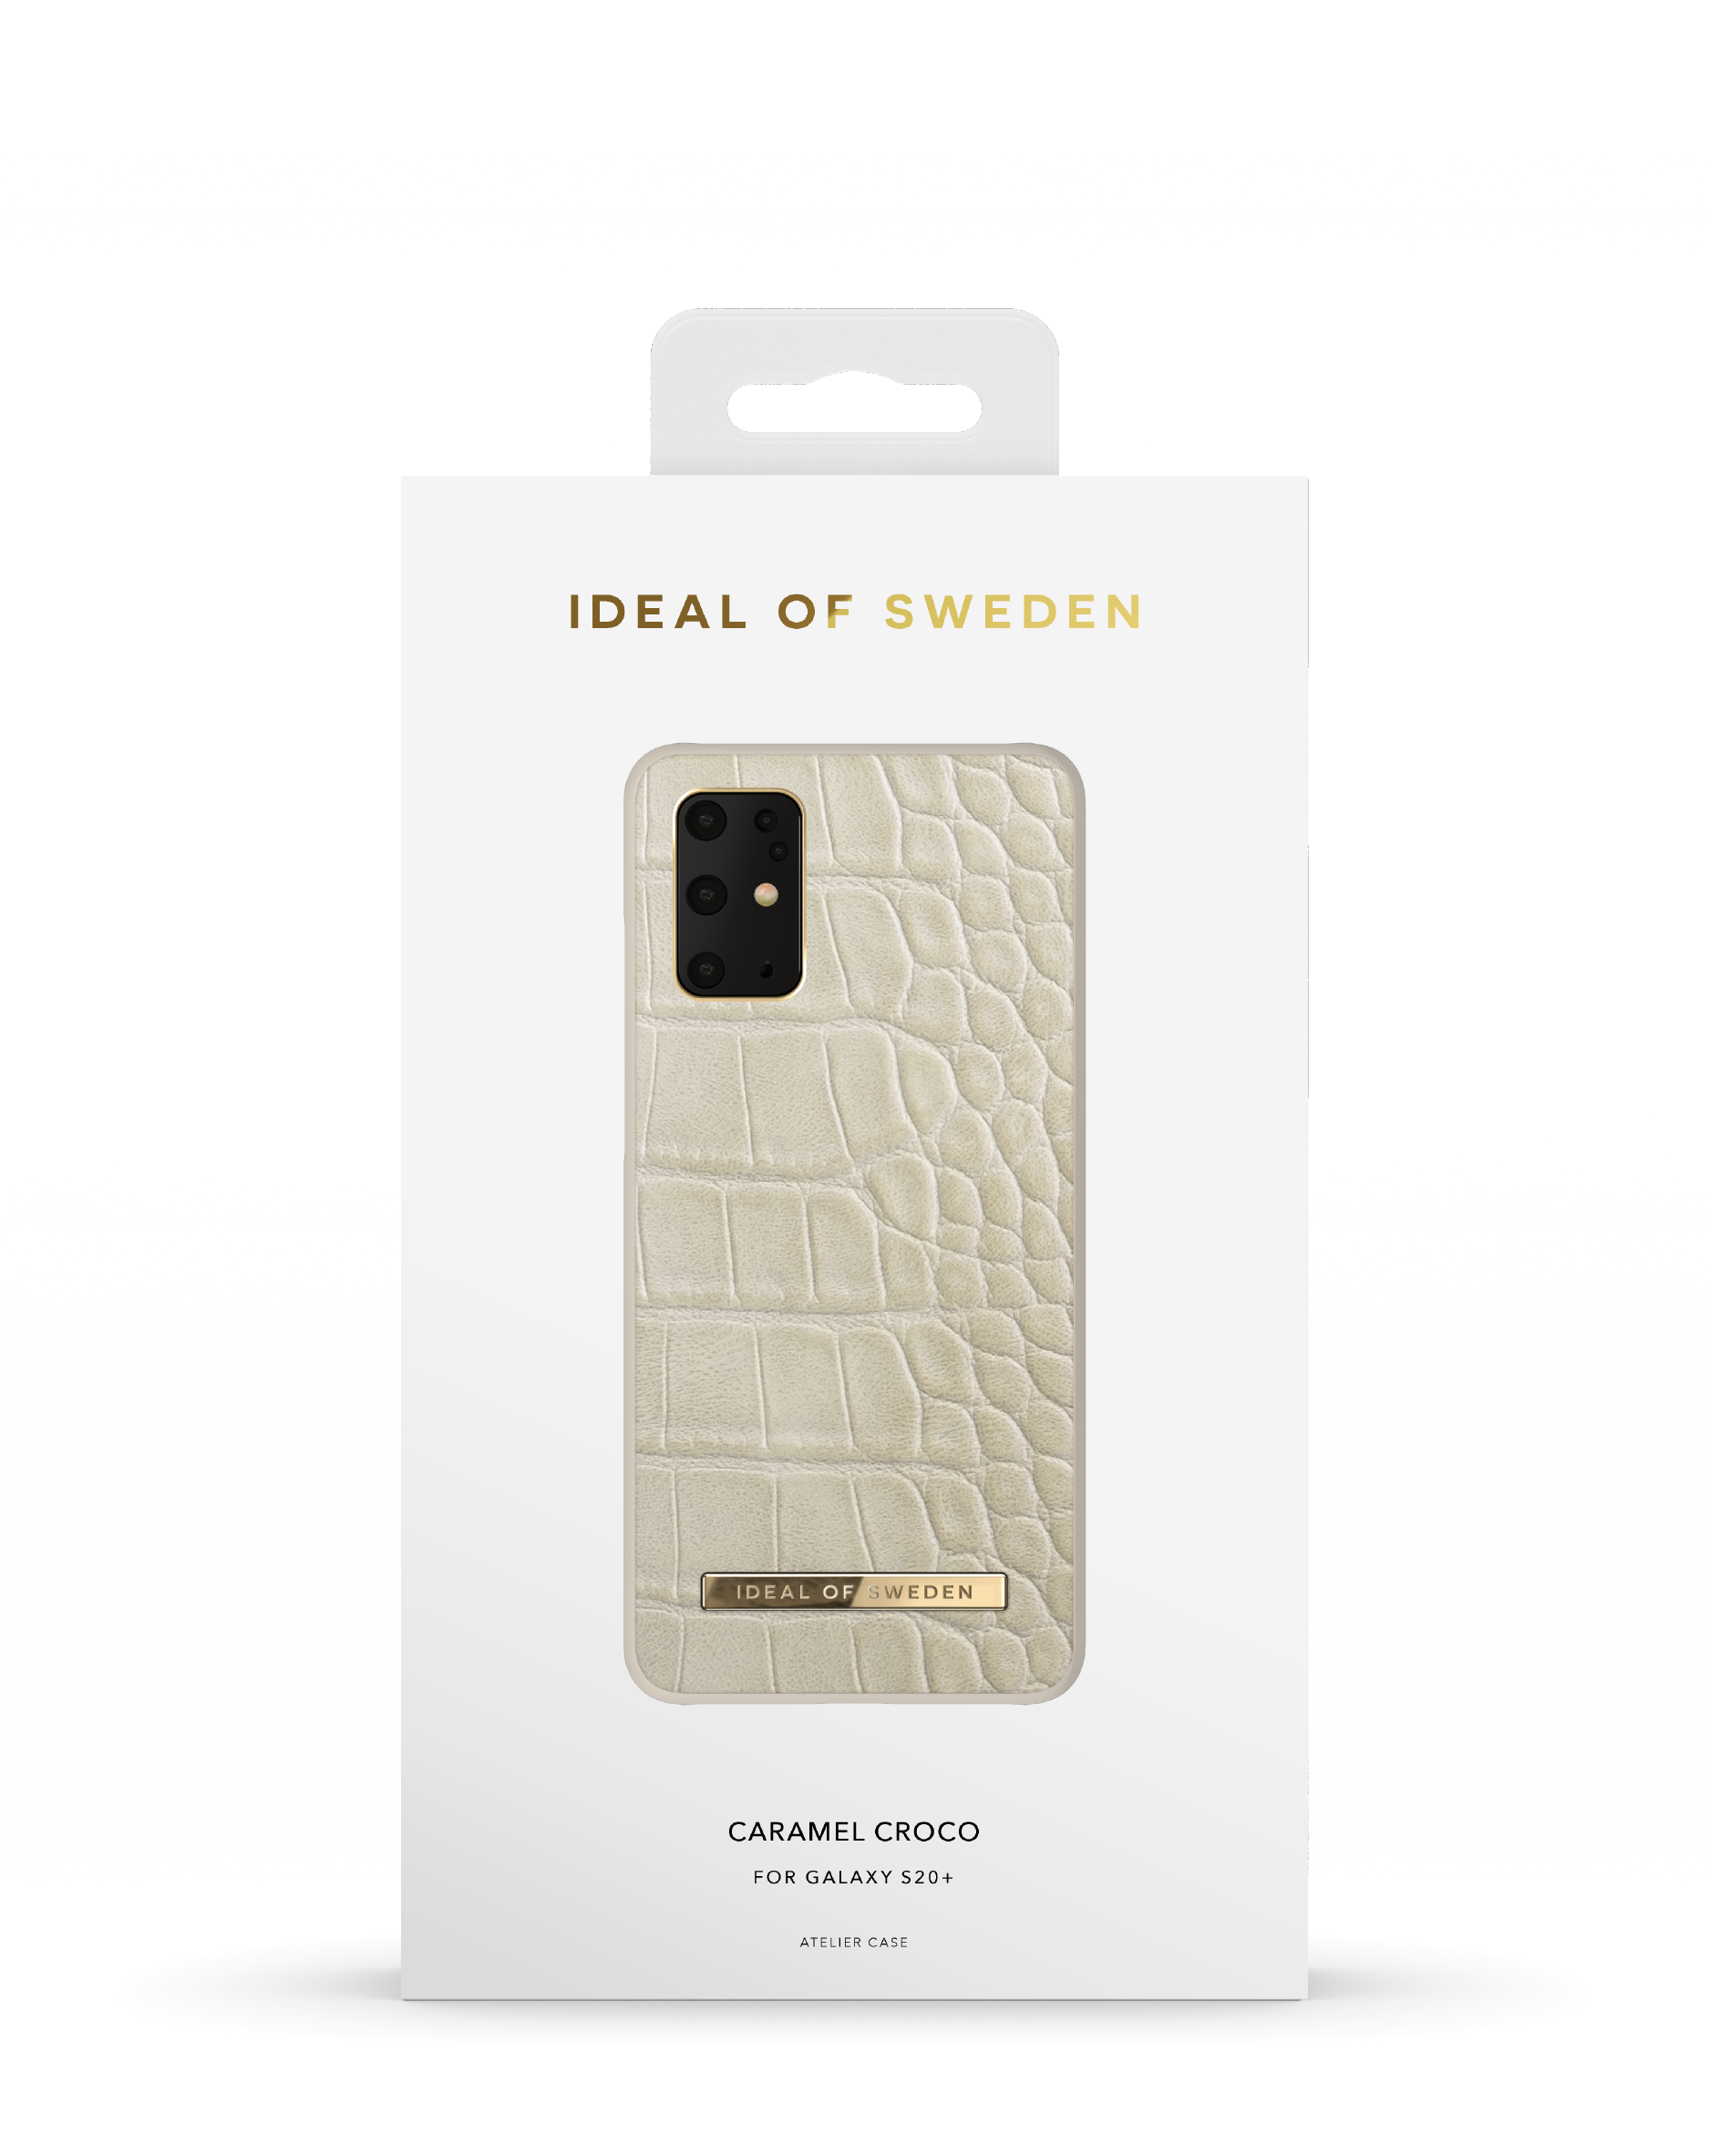 Caramel Croco OF IDEAL SWEDEN IDACAW20-S11P-243, Ultra, Backcover, Samsung, S20 Galaxy